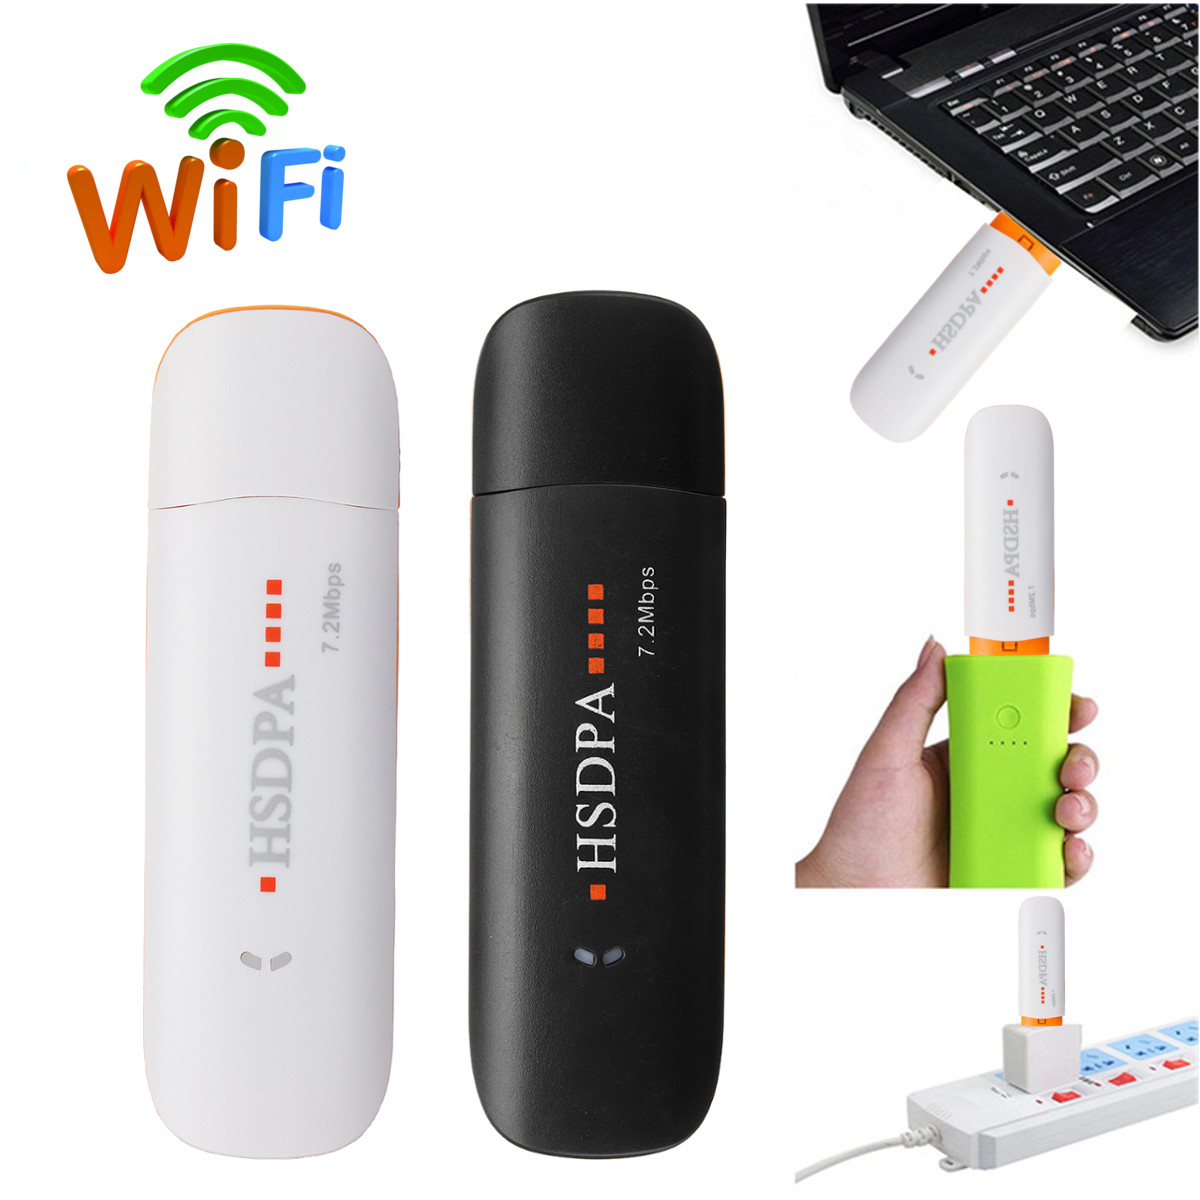 3G-HSDPA--HSUPA-Portable-Wireless-Wifi-Router-USB-Surf-Stick-Dongle-Mobile-Broadband-Modem-1646616-2